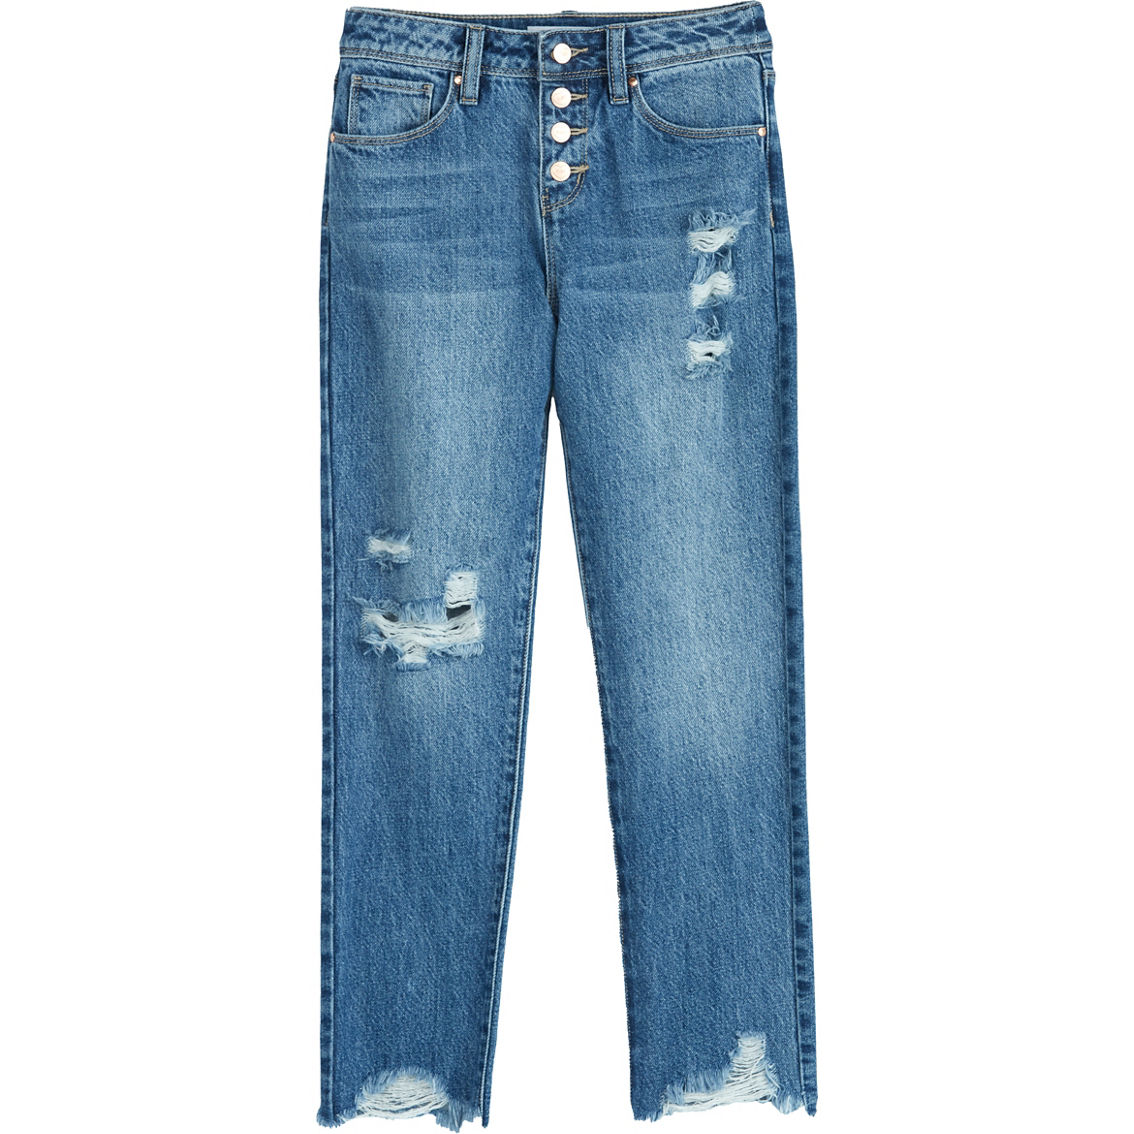 Ymi Jeans Girls Selena Dream High Rise Jeans | Girls 7-16 | Clothing ...